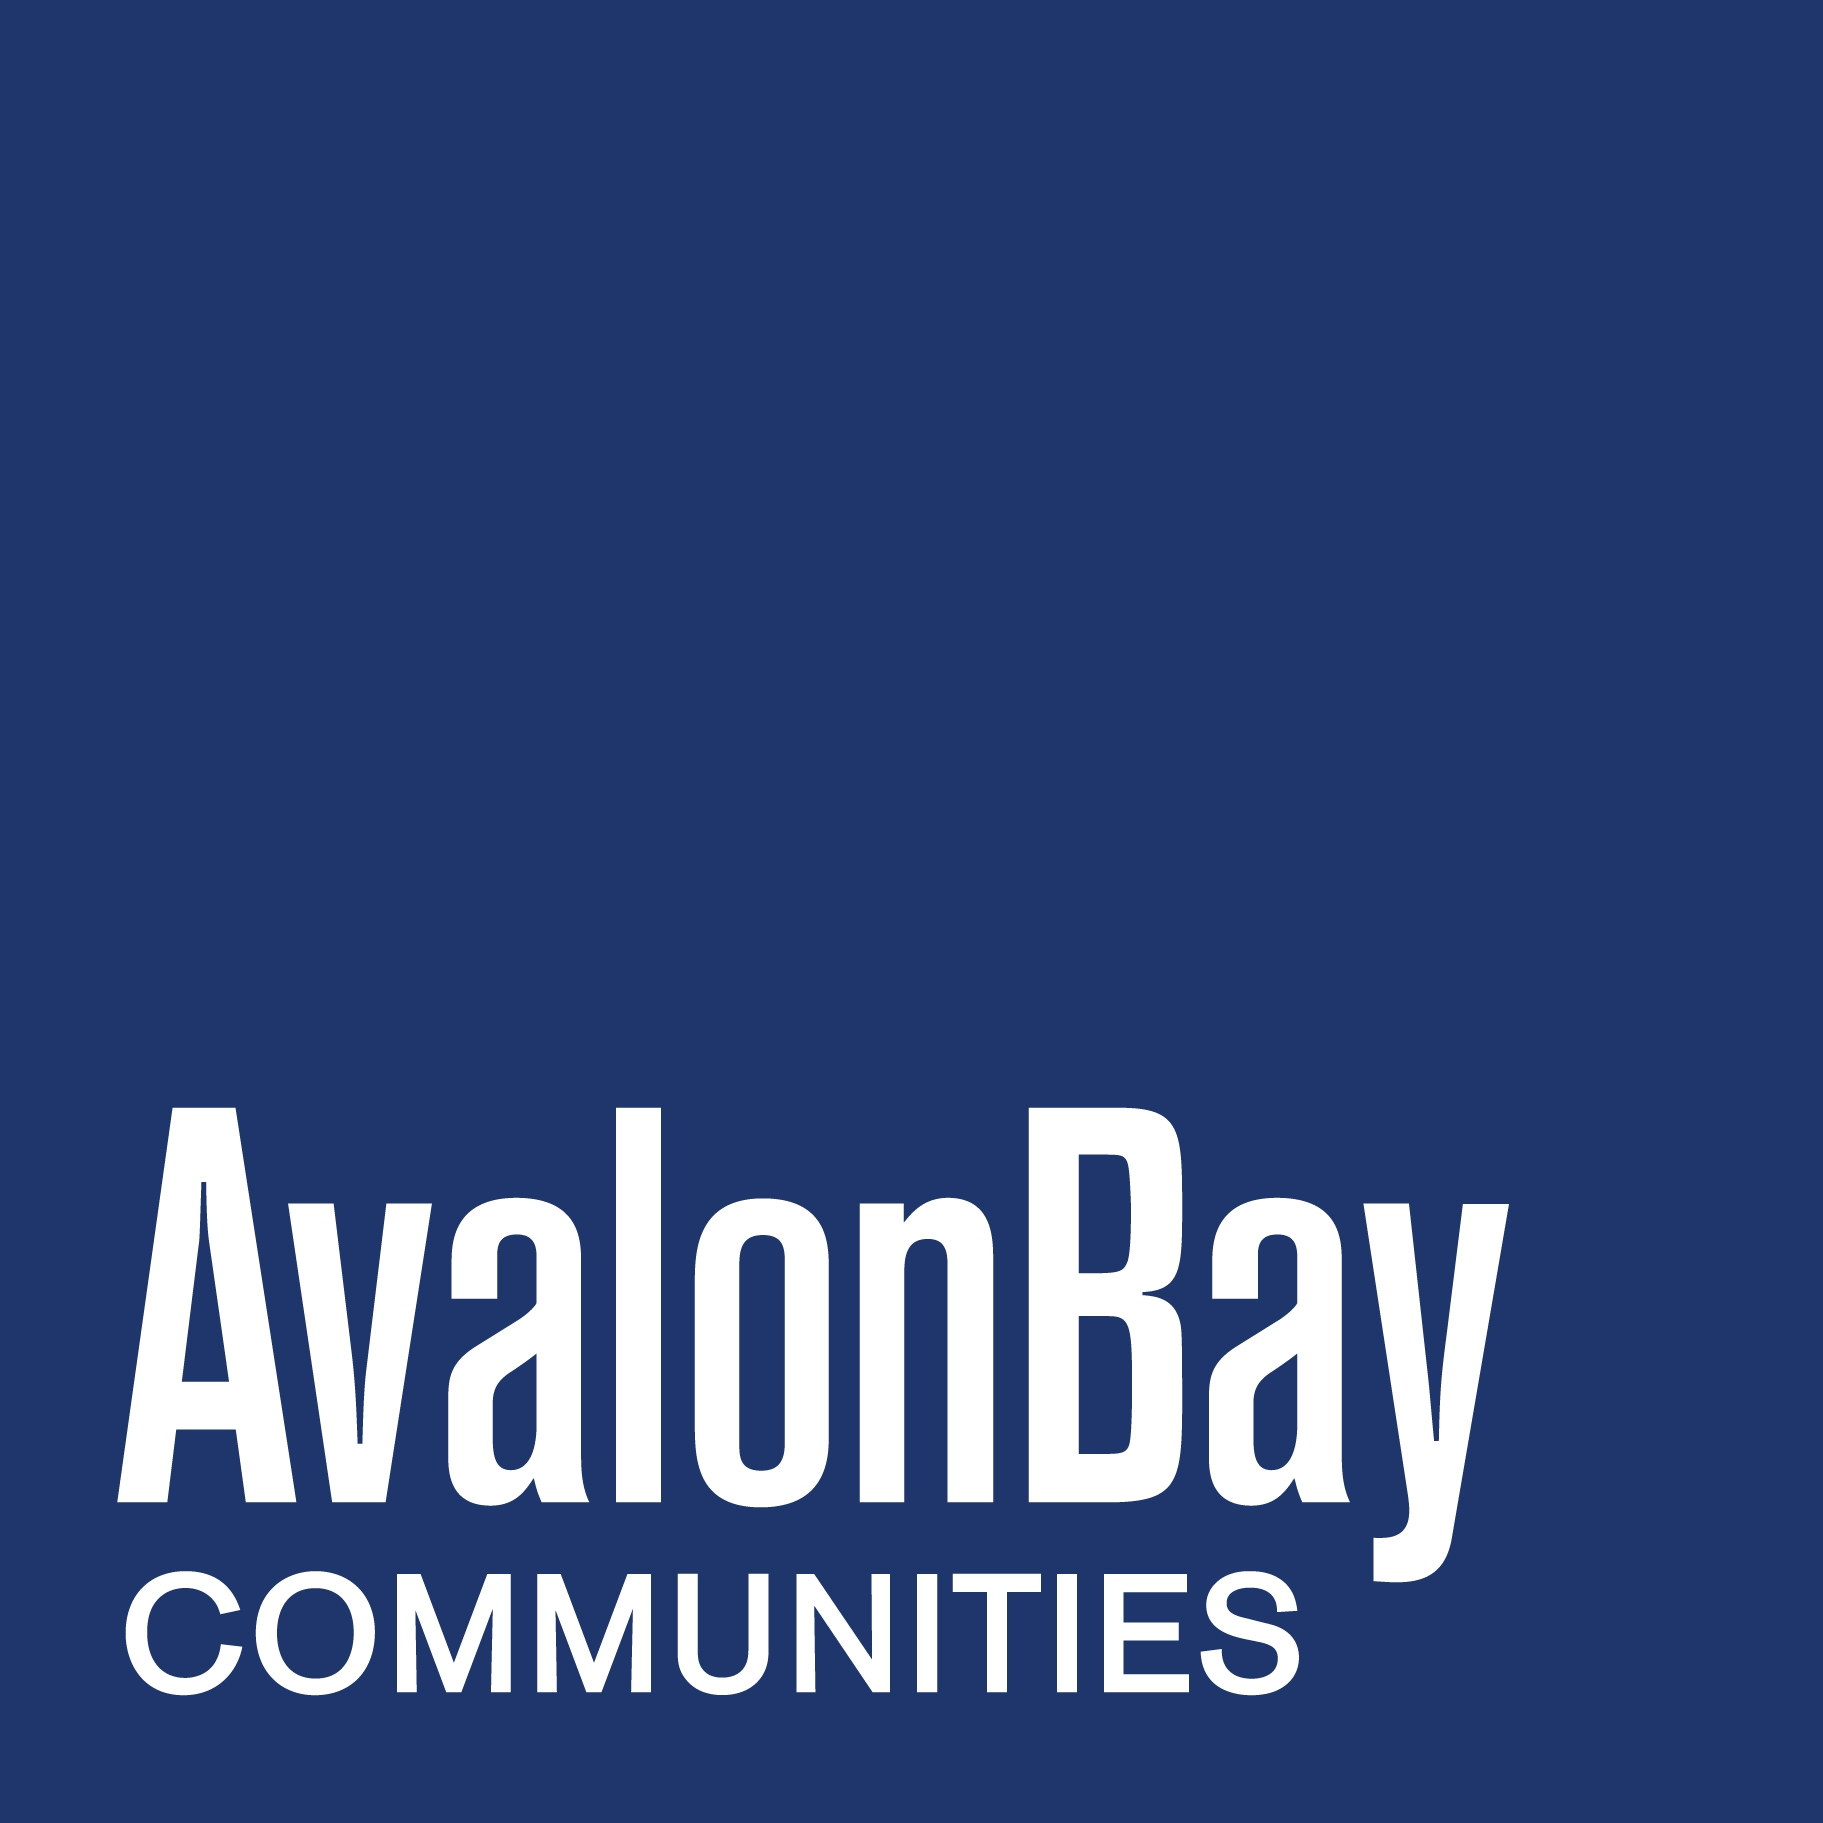 AvalonBay Communities, Inc. logo